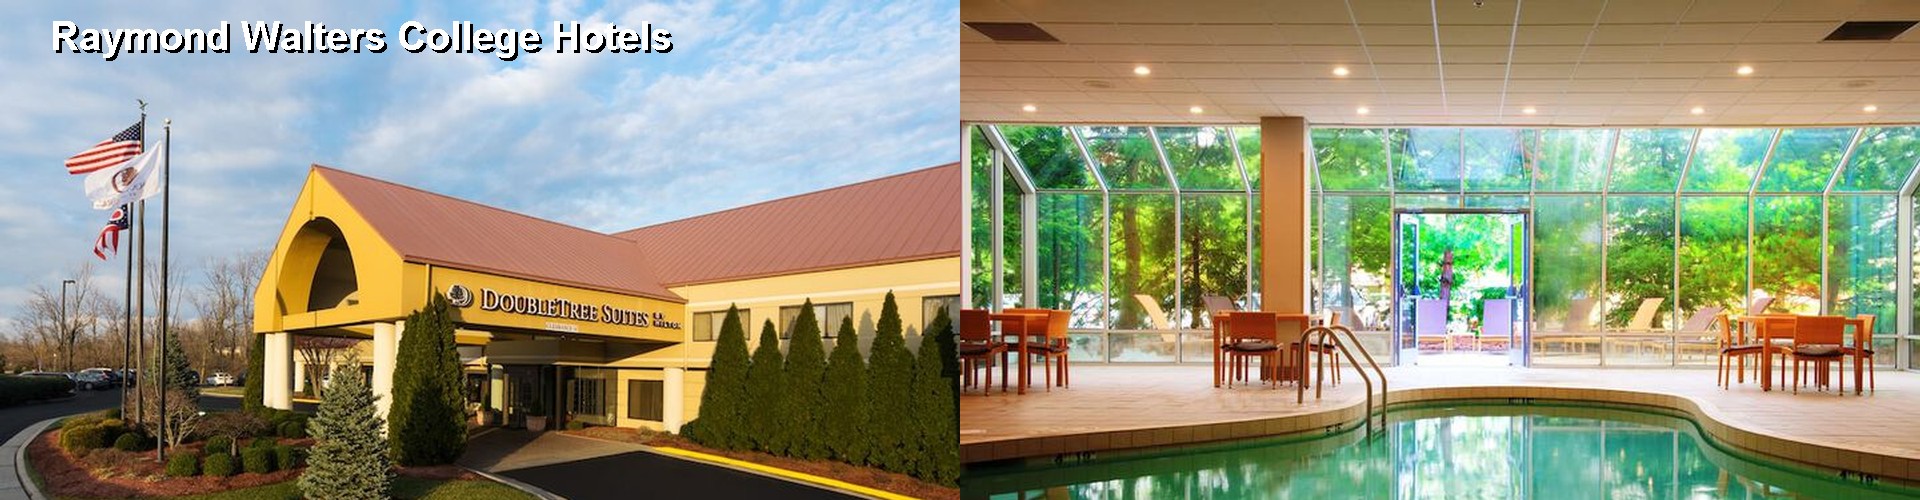 5 Best Hotels near Raymond Walters College